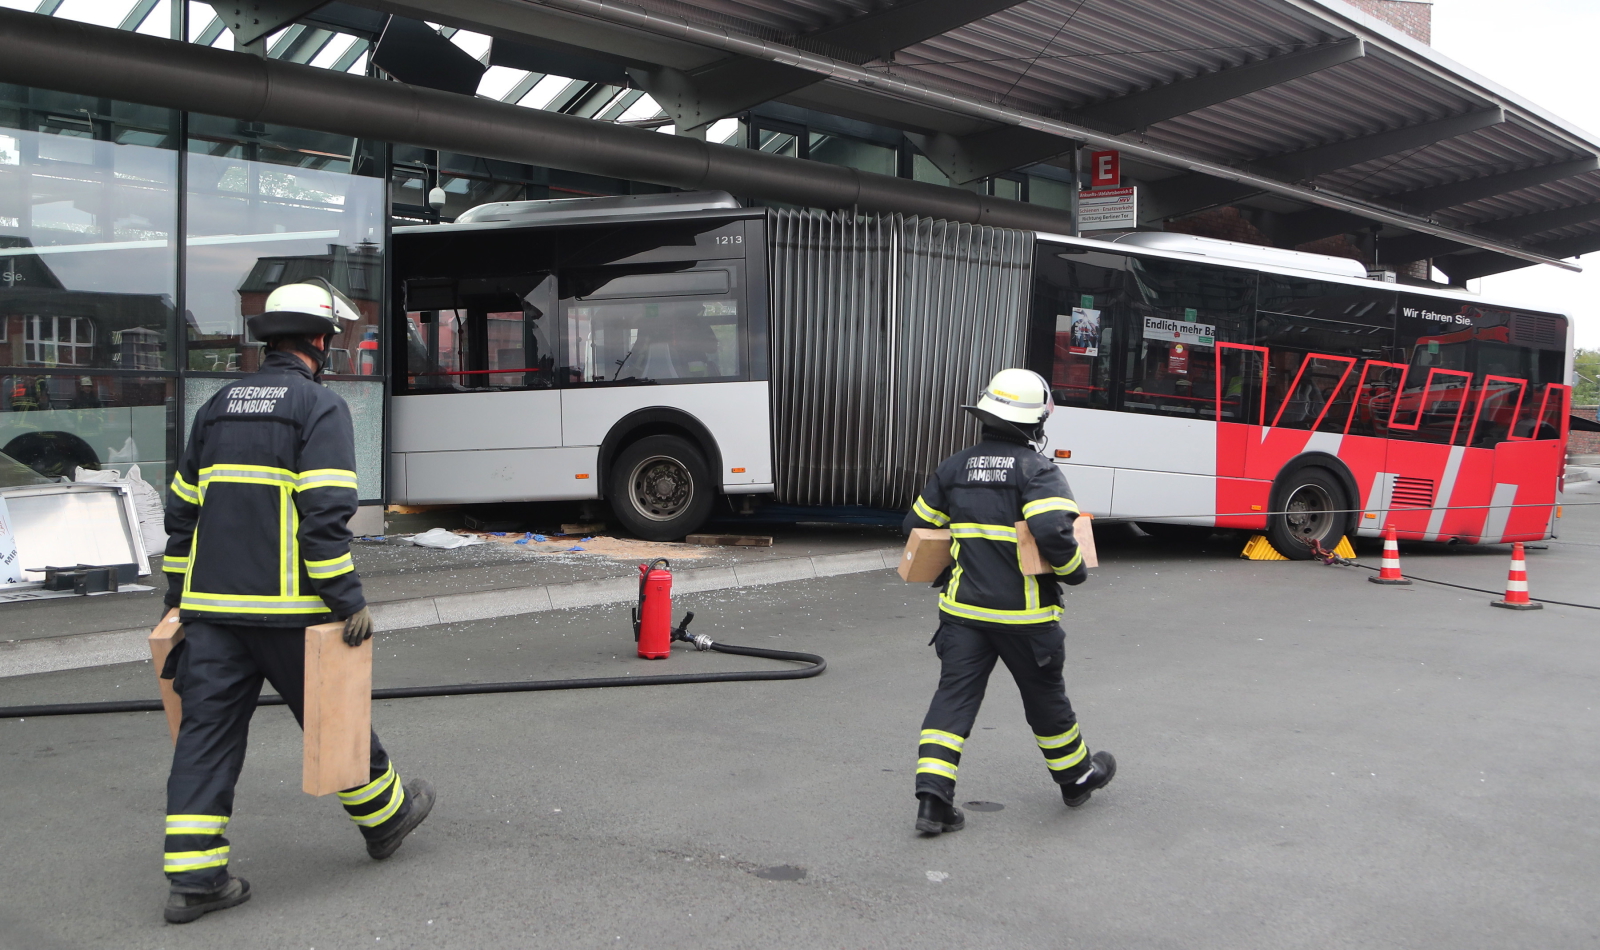 Wypadek autobusowy w Hamburgu EPA/LARS EBNER 